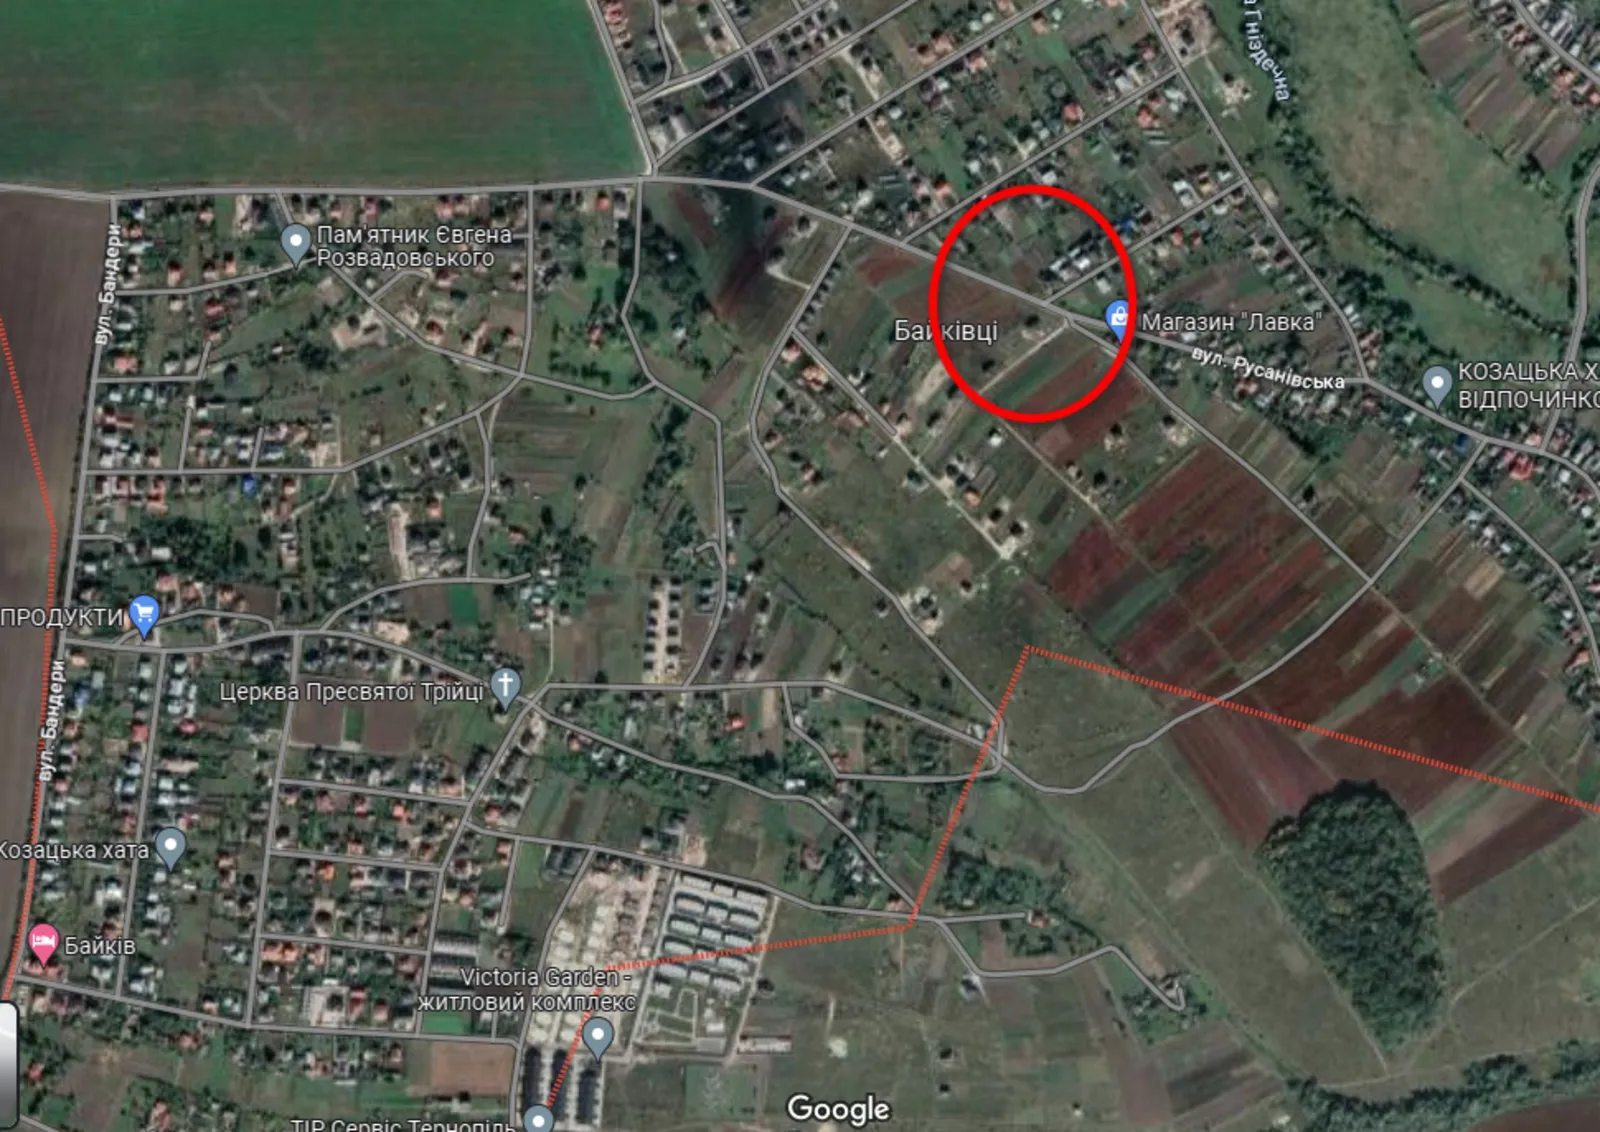 Land for sale for residential construction. Hayi Chumakovi za KP, Baykovtsy. 